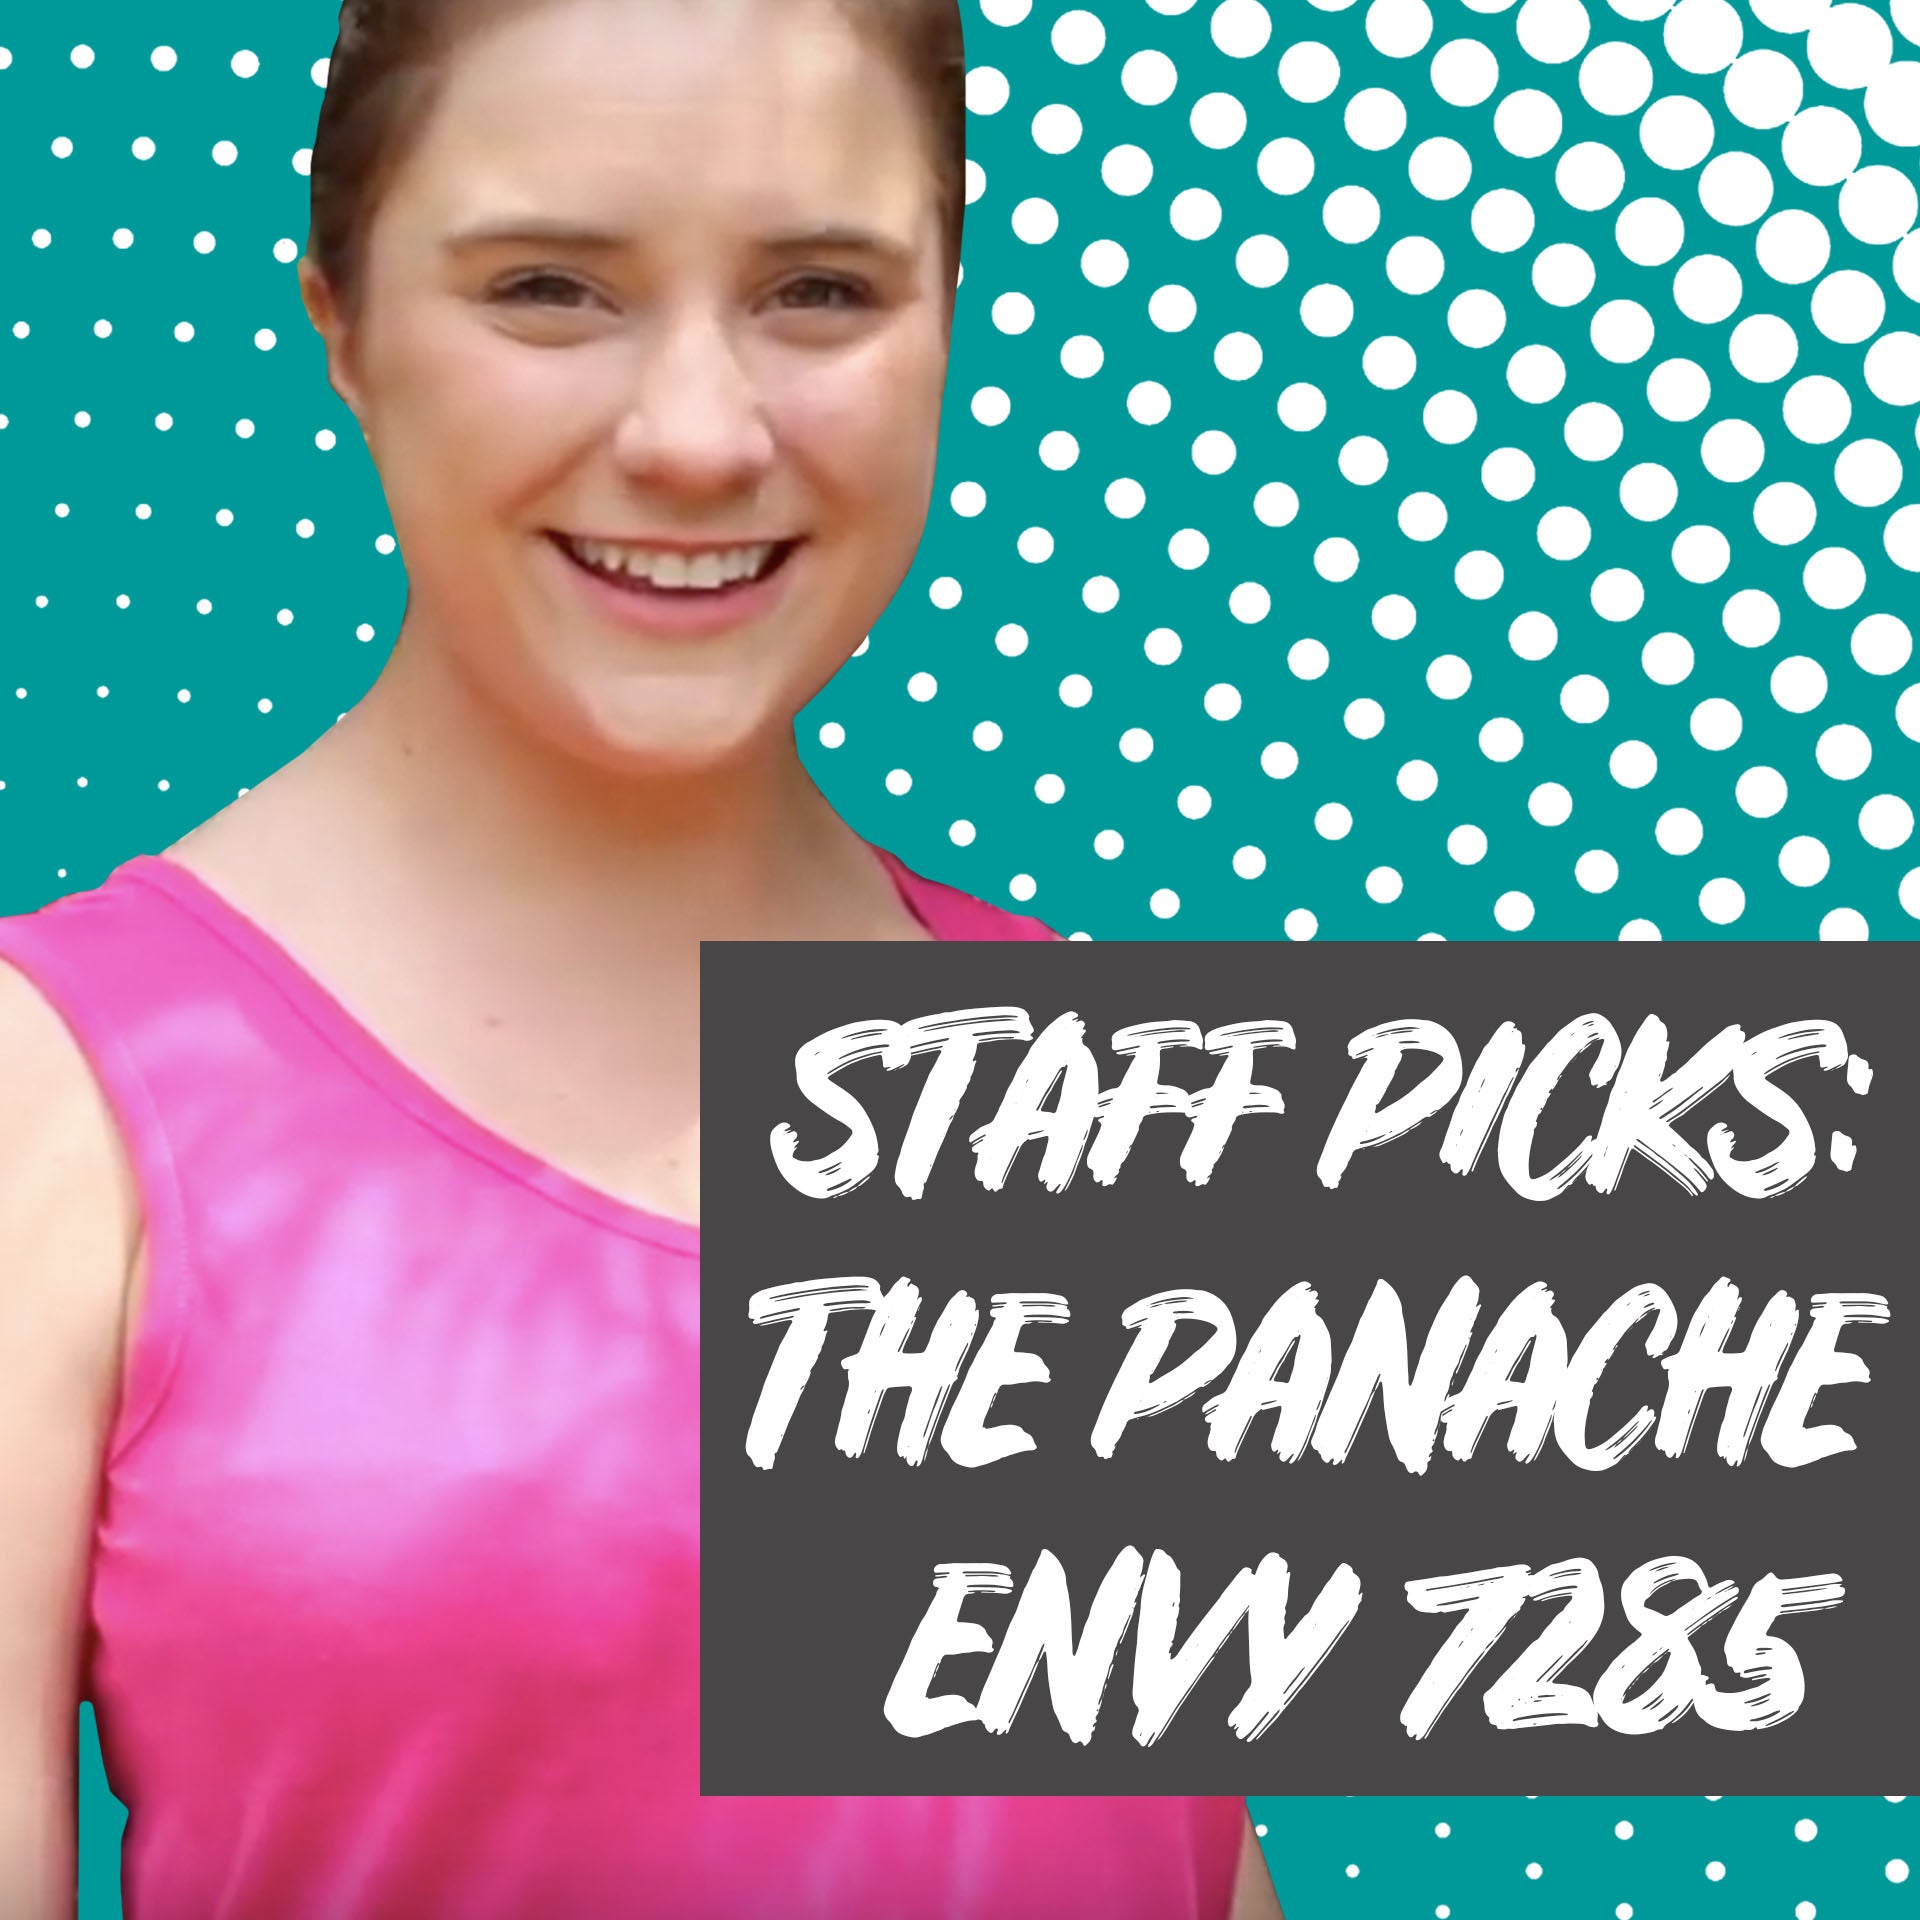 Staff Picks: The Panache Envy 7285